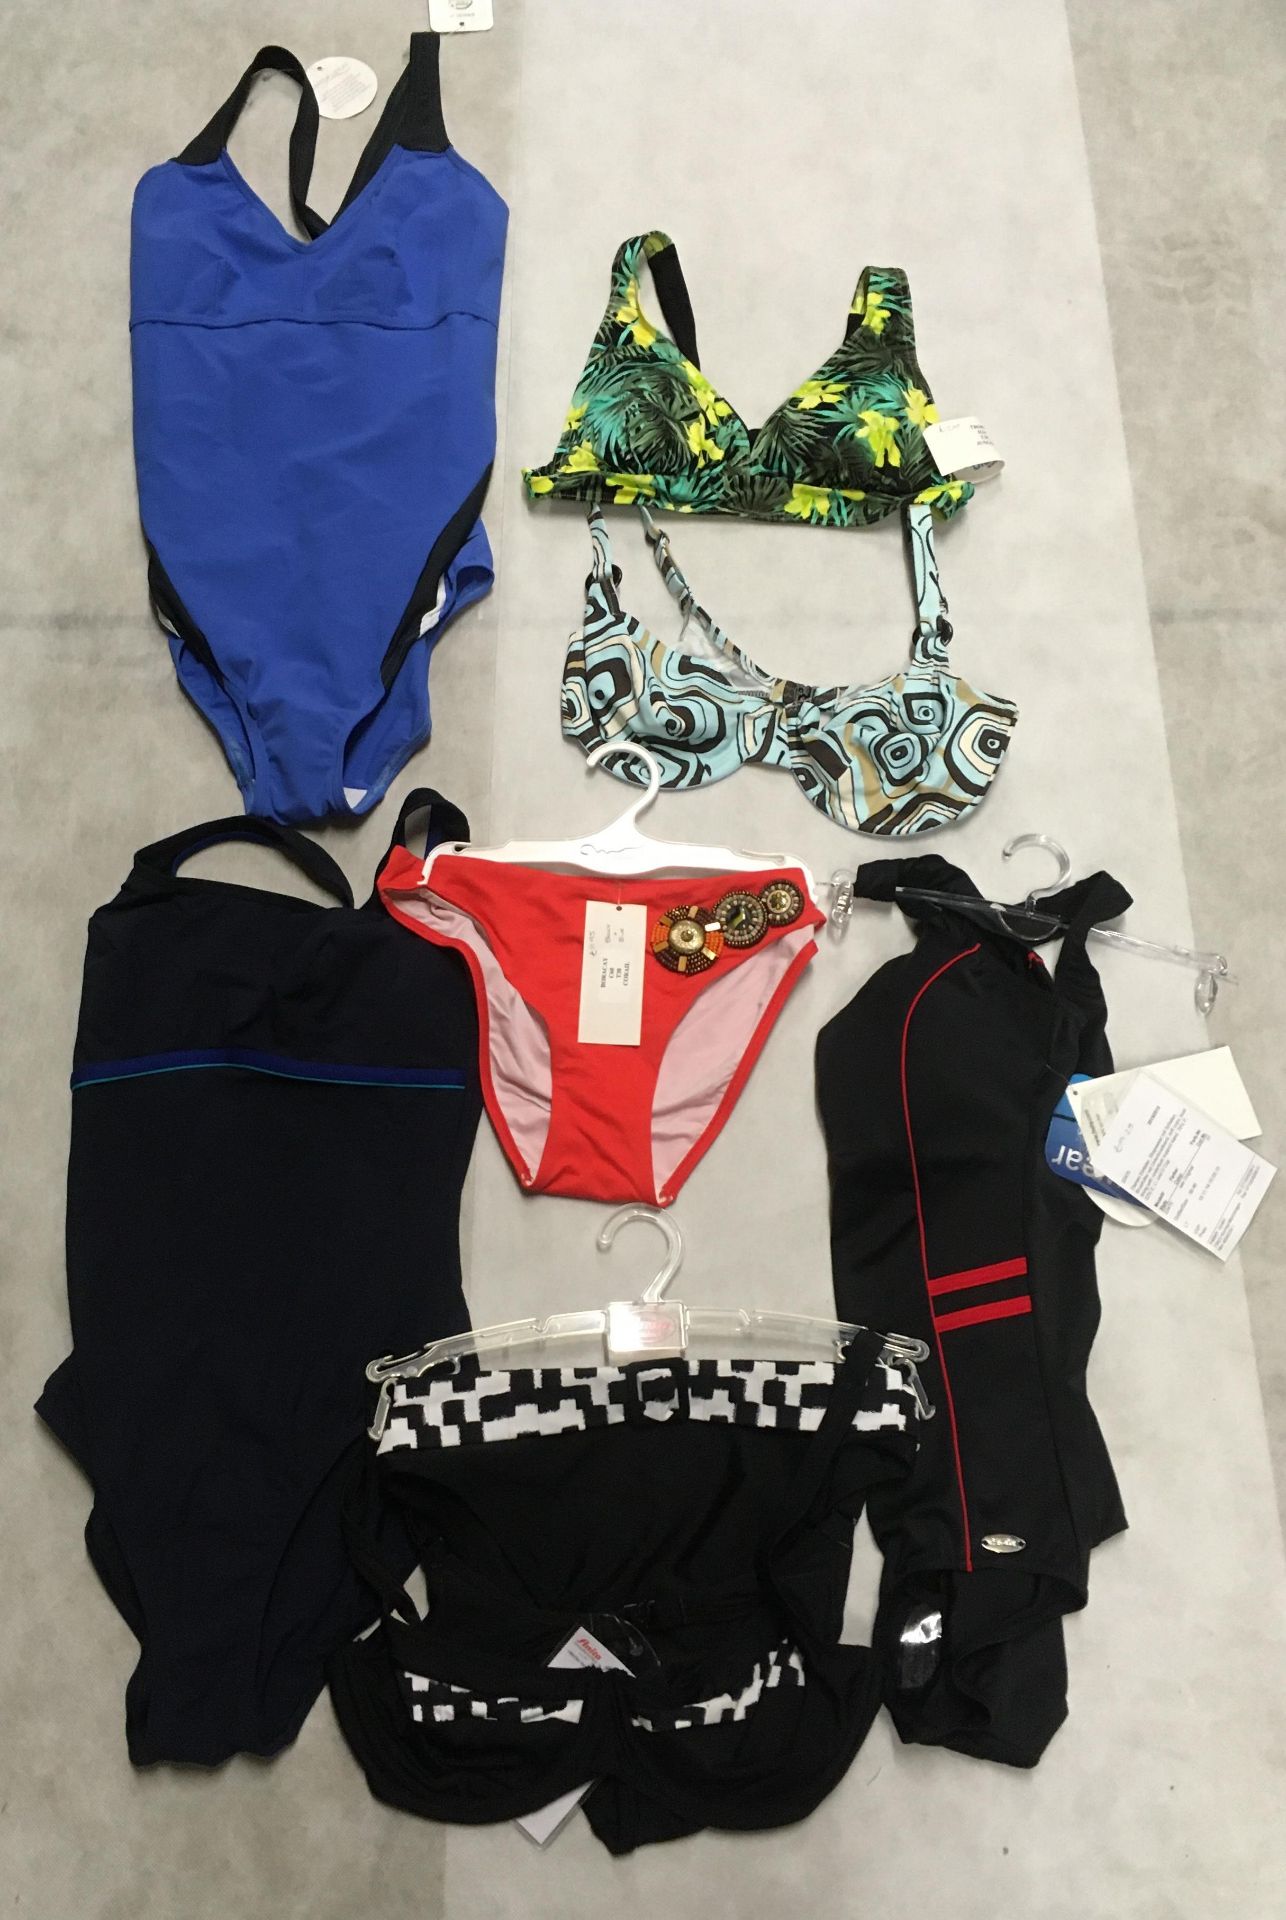 10 x assorted ladies swimware items by Speedo, Rosa Faia,